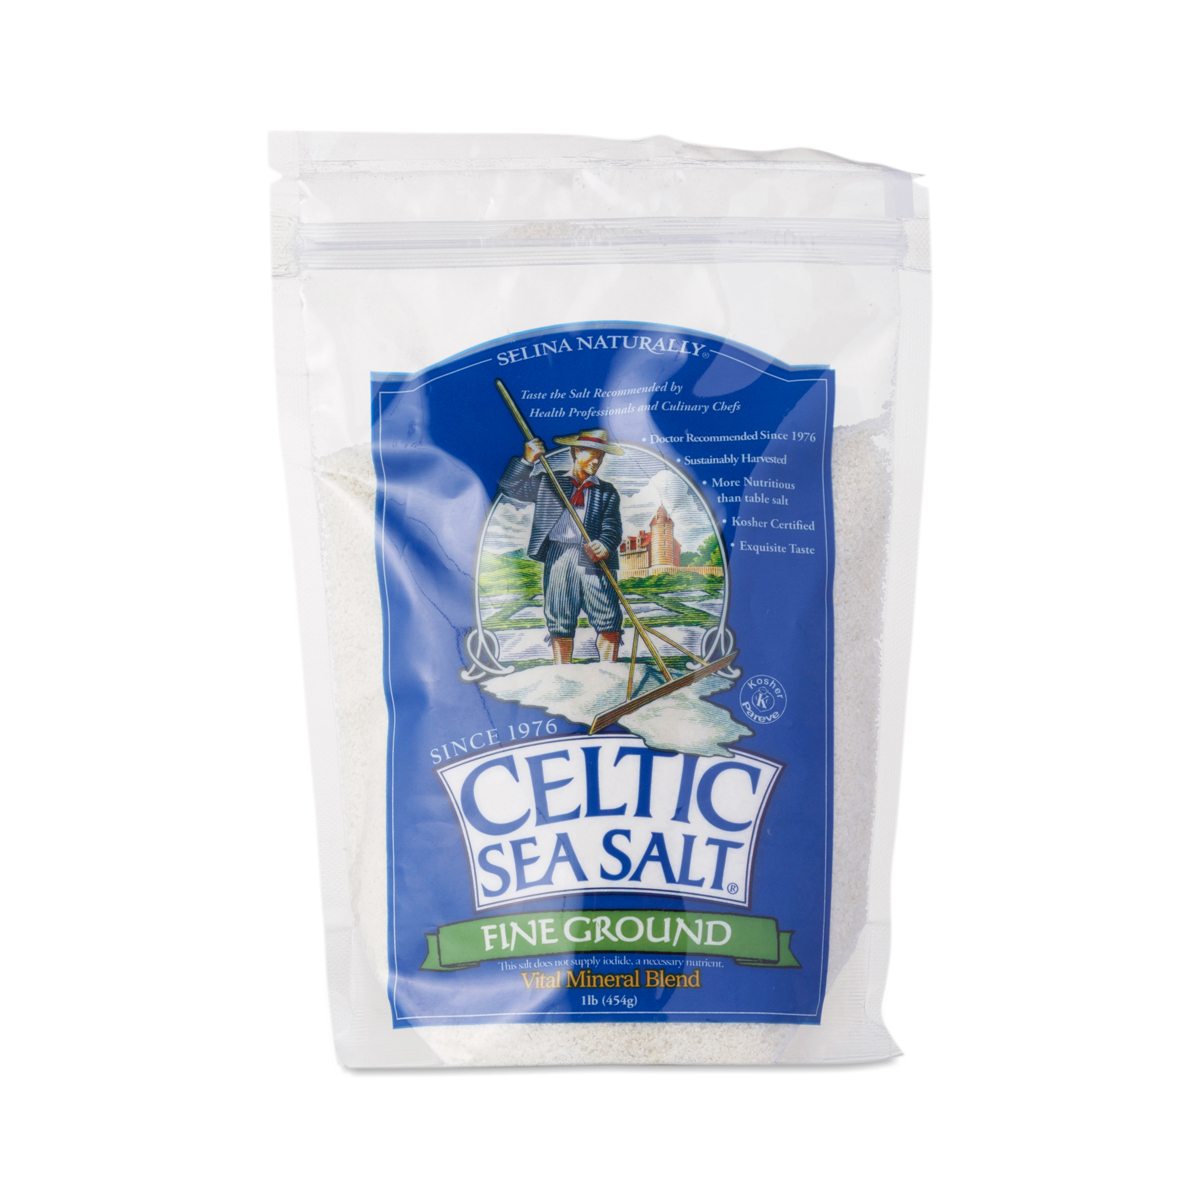 Selina Naturally Celtic Sea Salt, Fine Ground 1 lb pouch